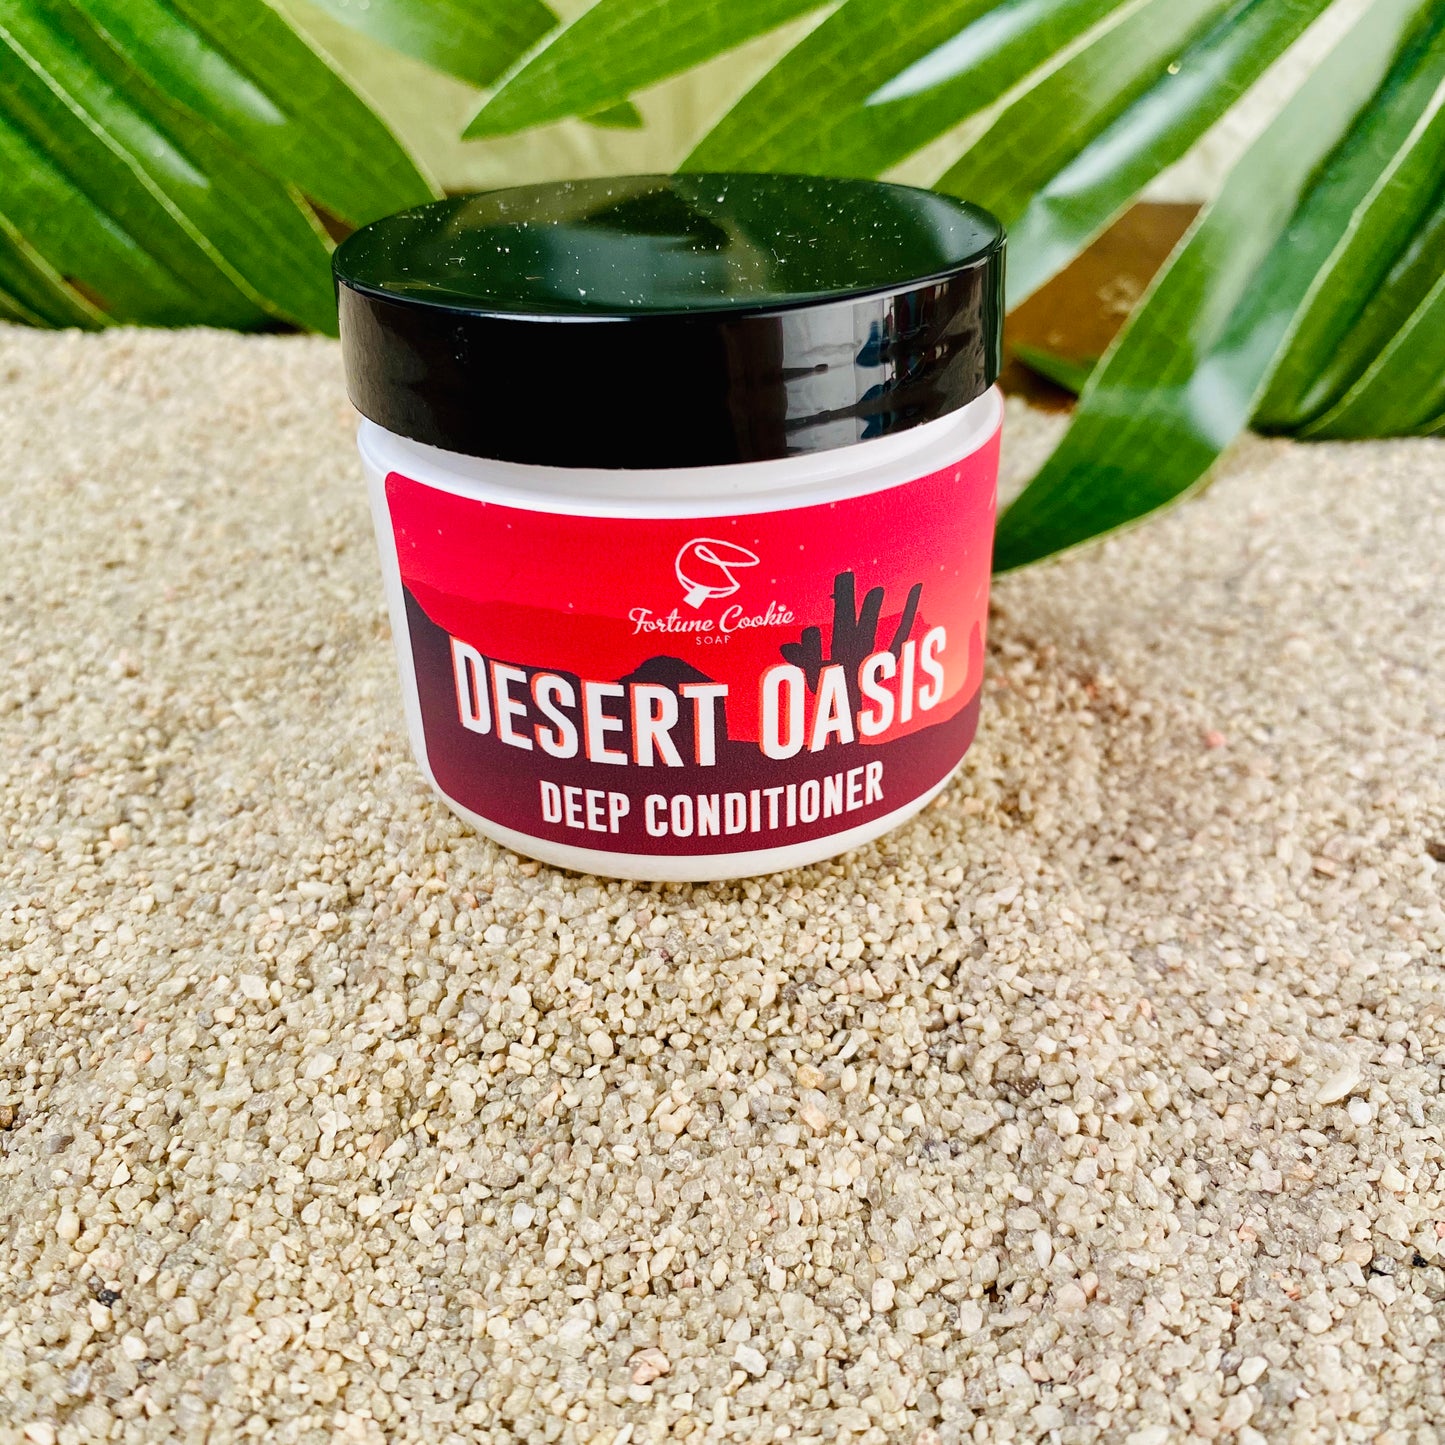 DESERT OASIS Deep Conditioner